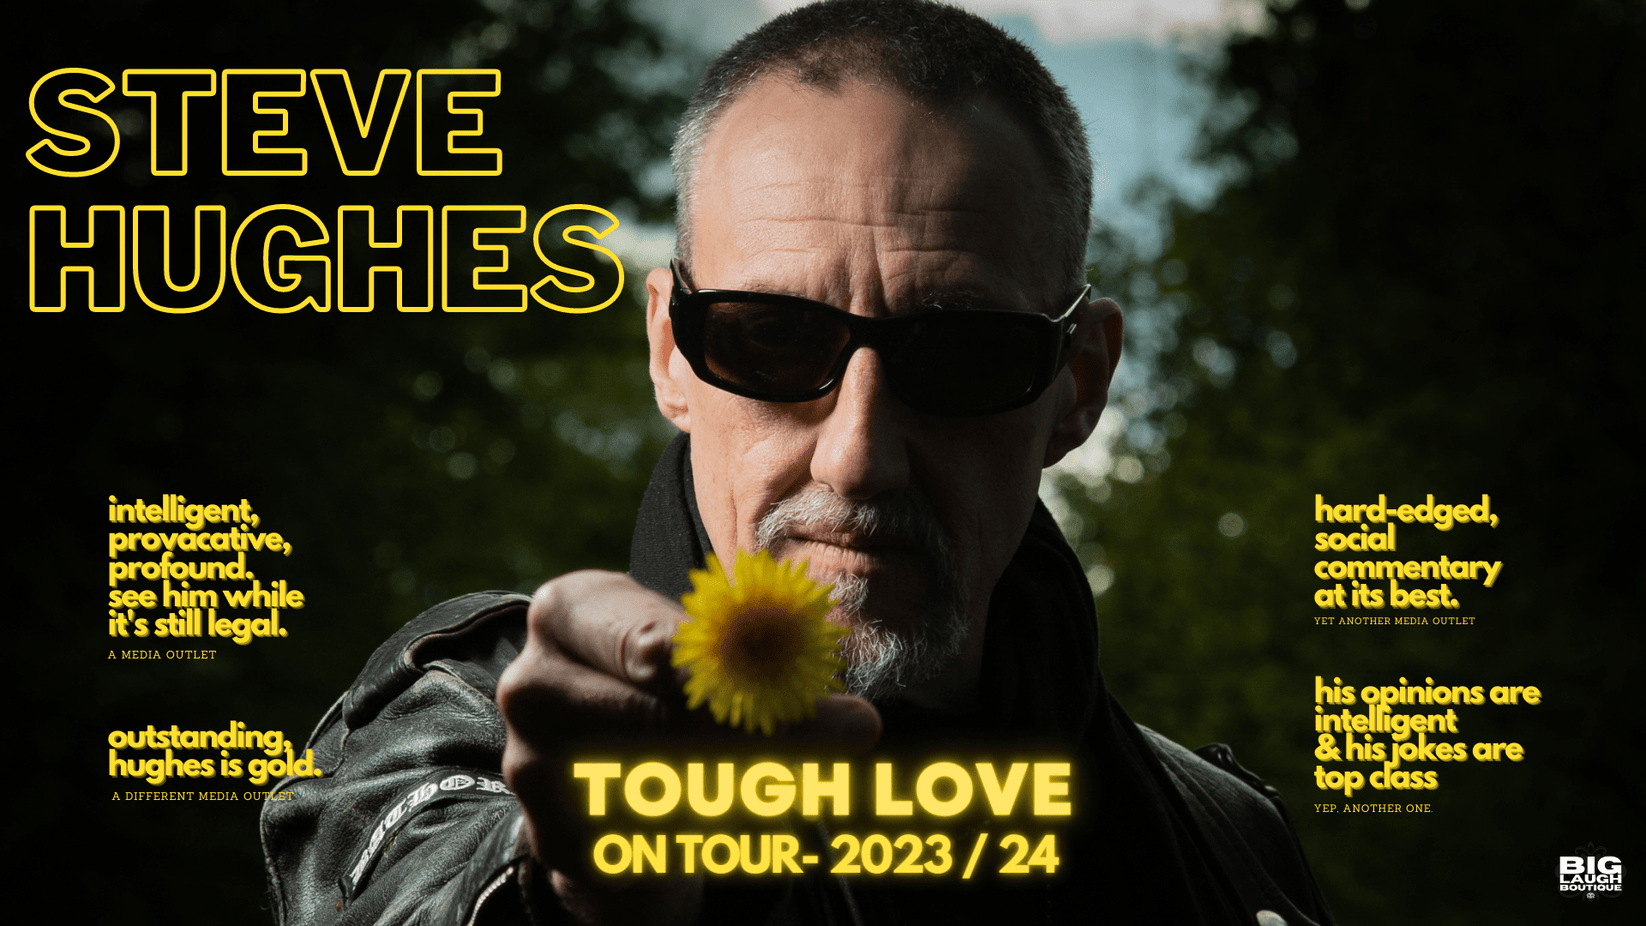 steve hughes tough love tour